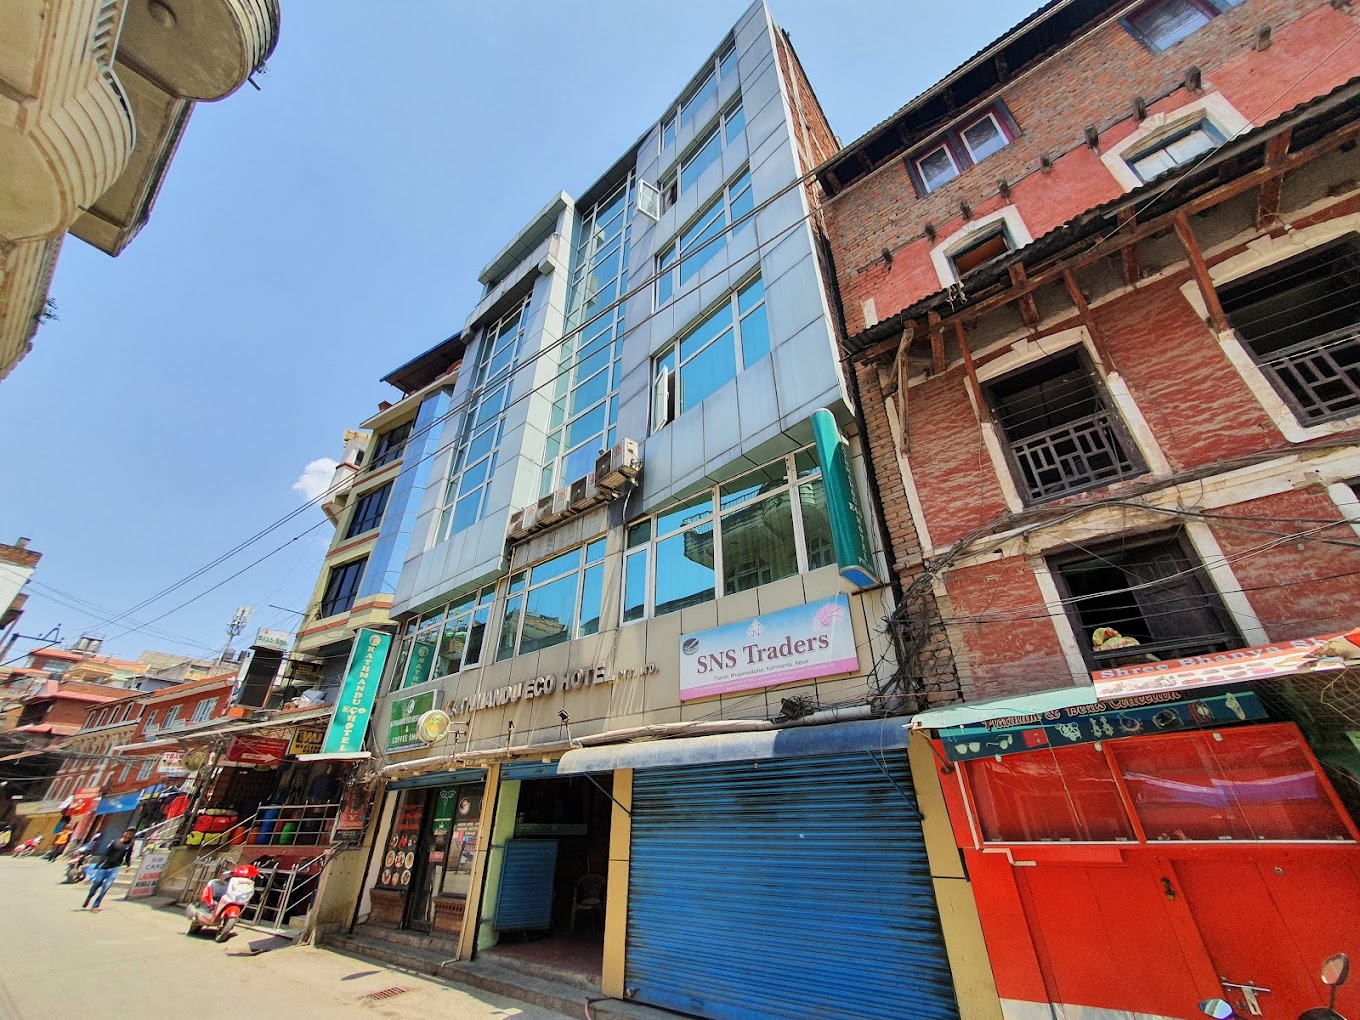 Kathmandu Eco Hotel